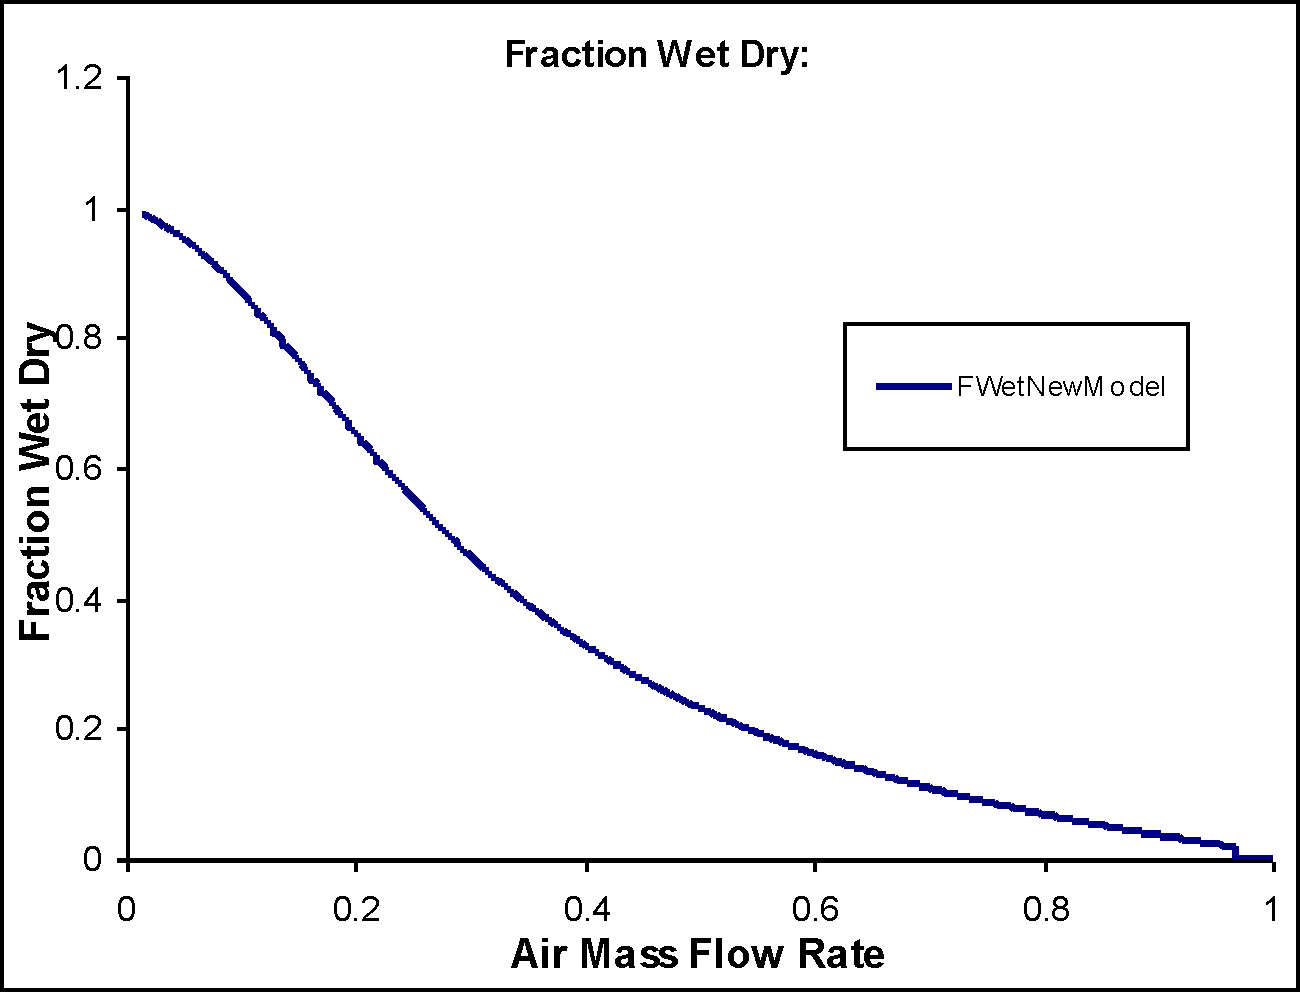 Surface Area Fraction Wet Vs Air Mass Flow Rate [fig:surface-area-fraction-wet-vs-air-mass-flow]